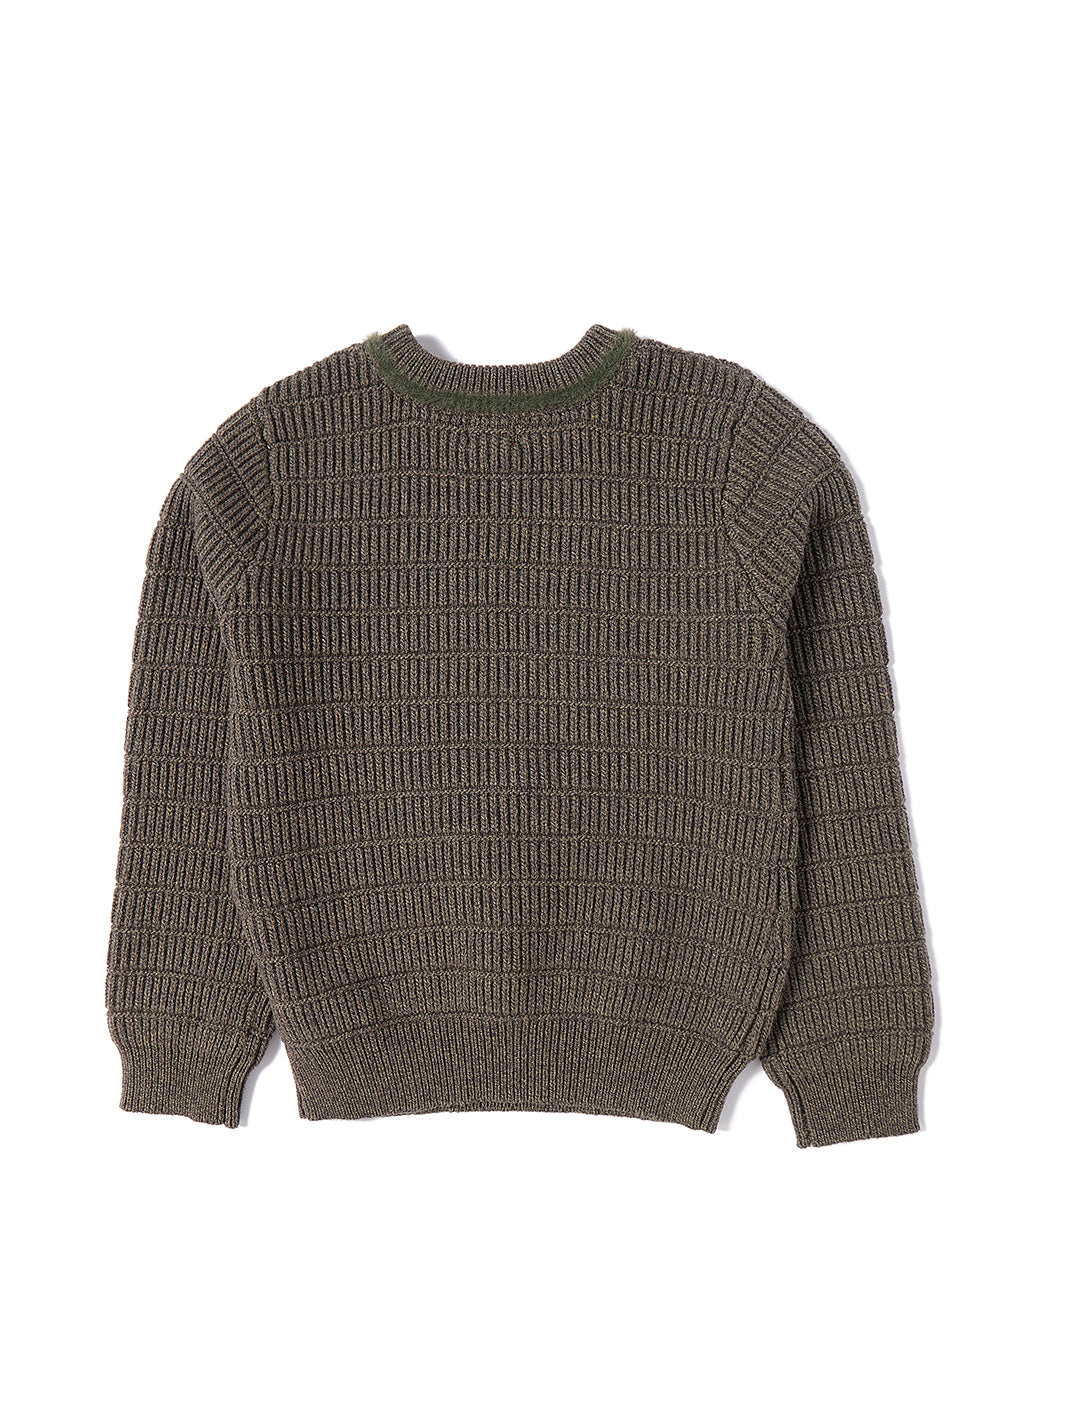 Fur Trim Neck Sweater - Olive